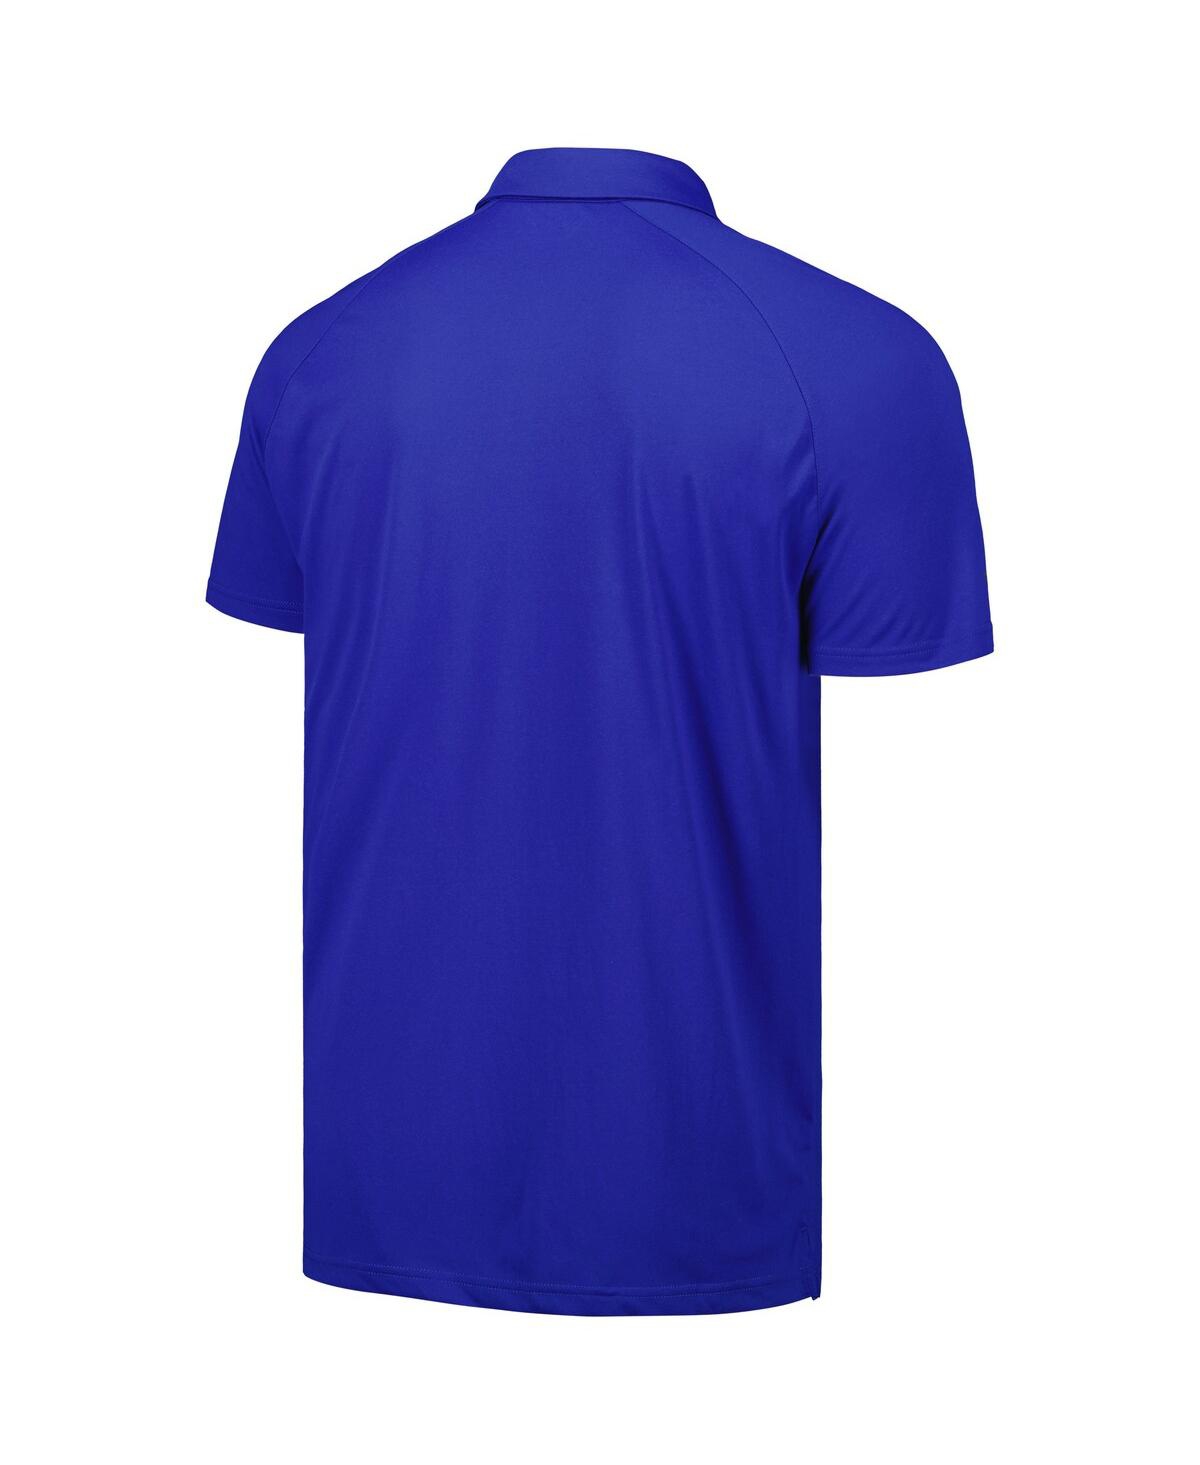 Shop Levelwear Men's  Royal Los Angeles Dodgers Sector Batter Up Raglan Polo Shirt